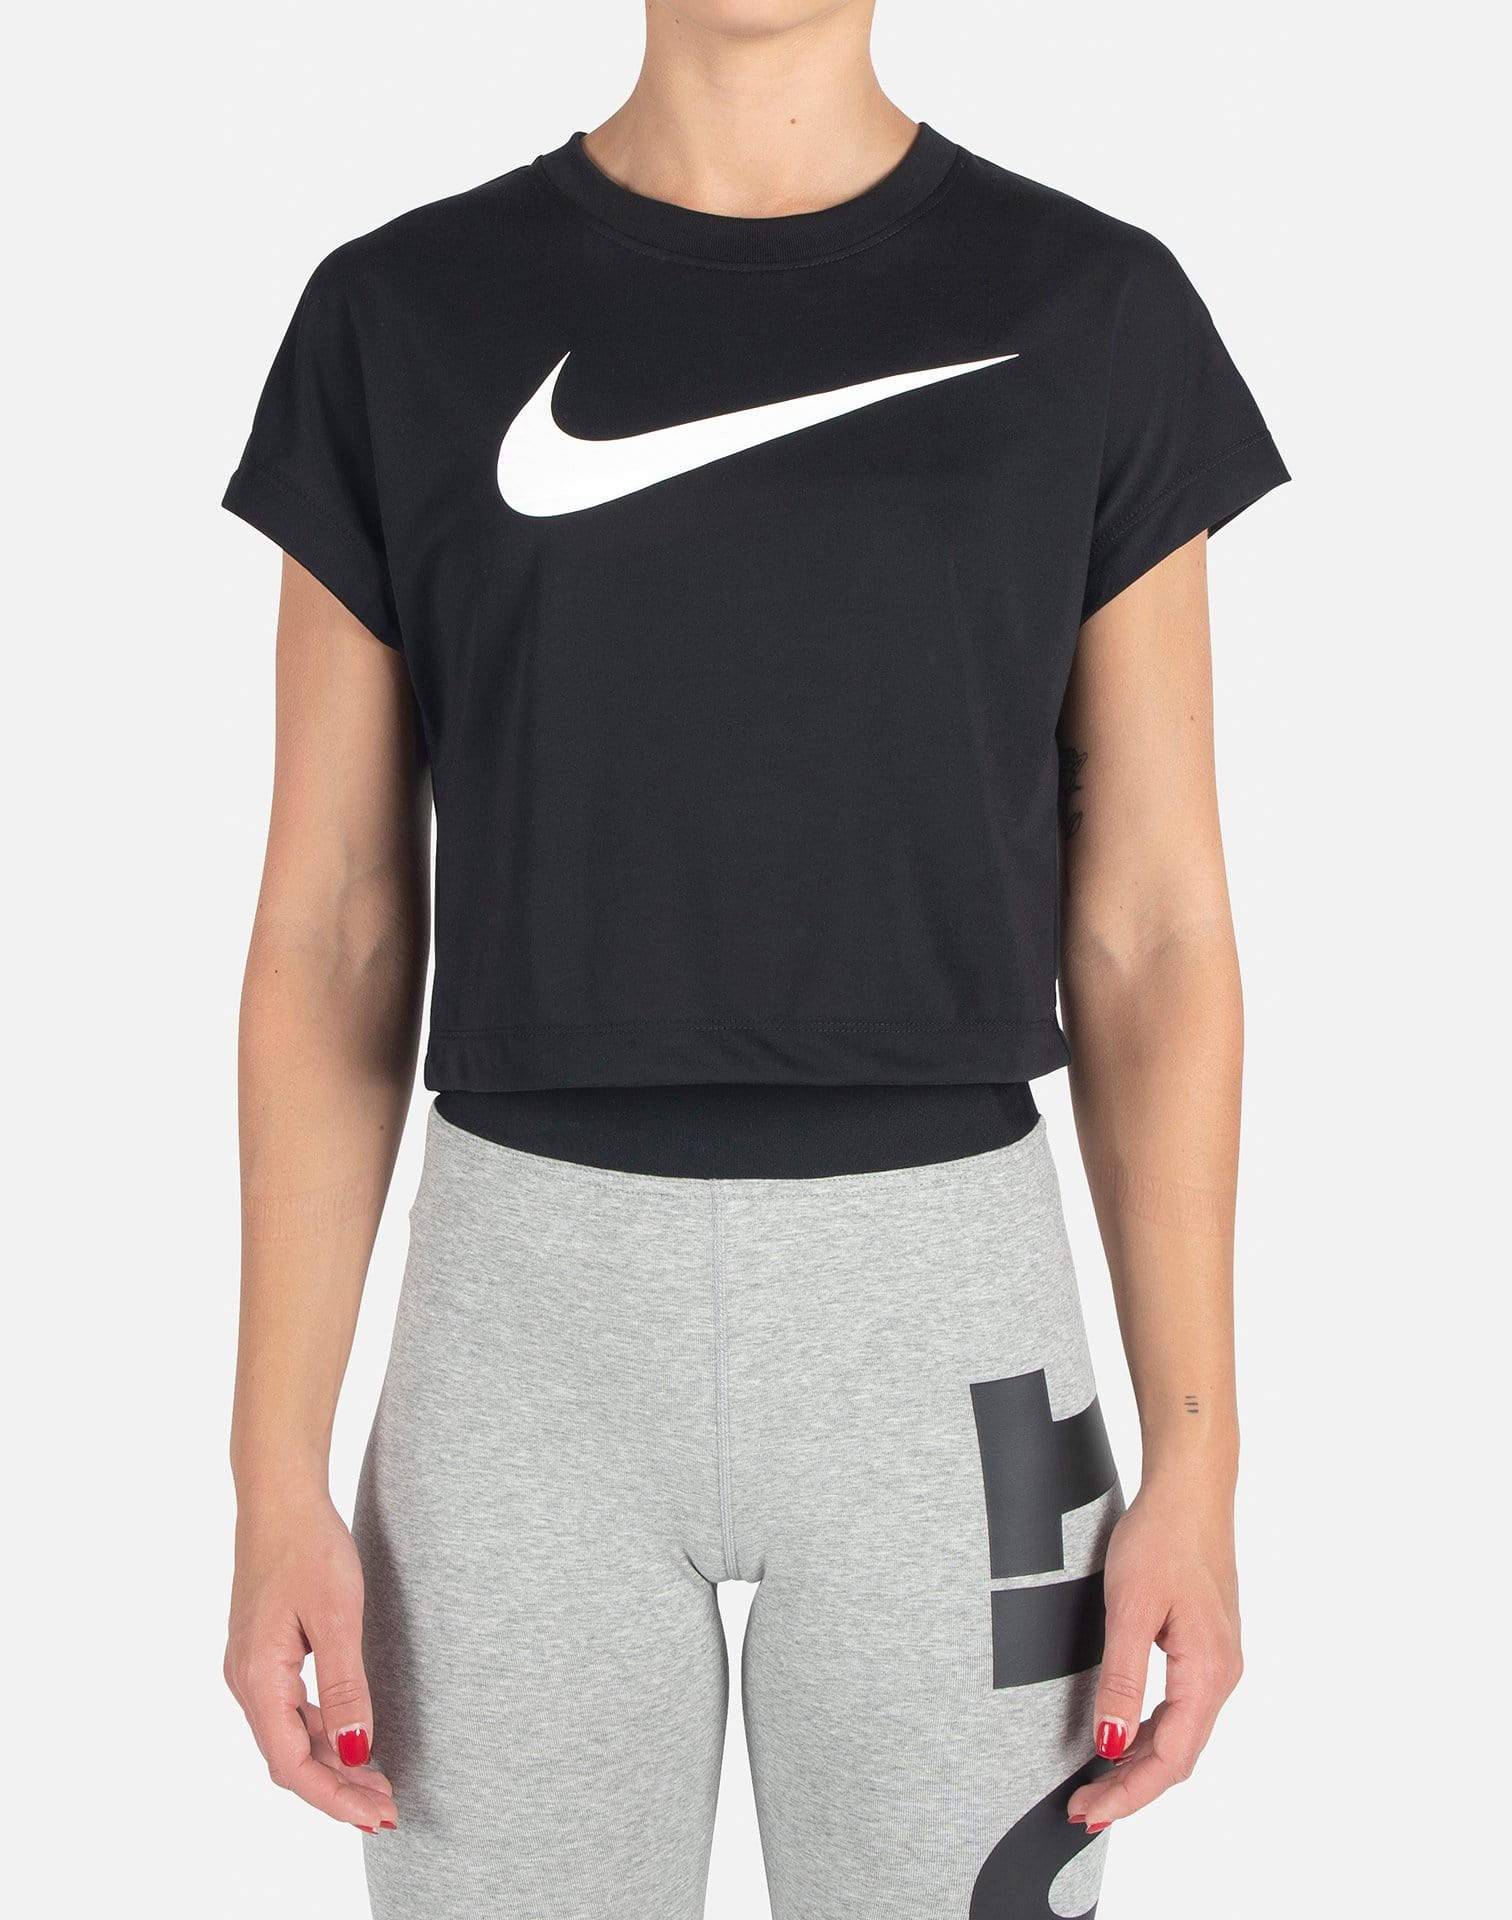 Nike Women's Swoosh Cropped Tee